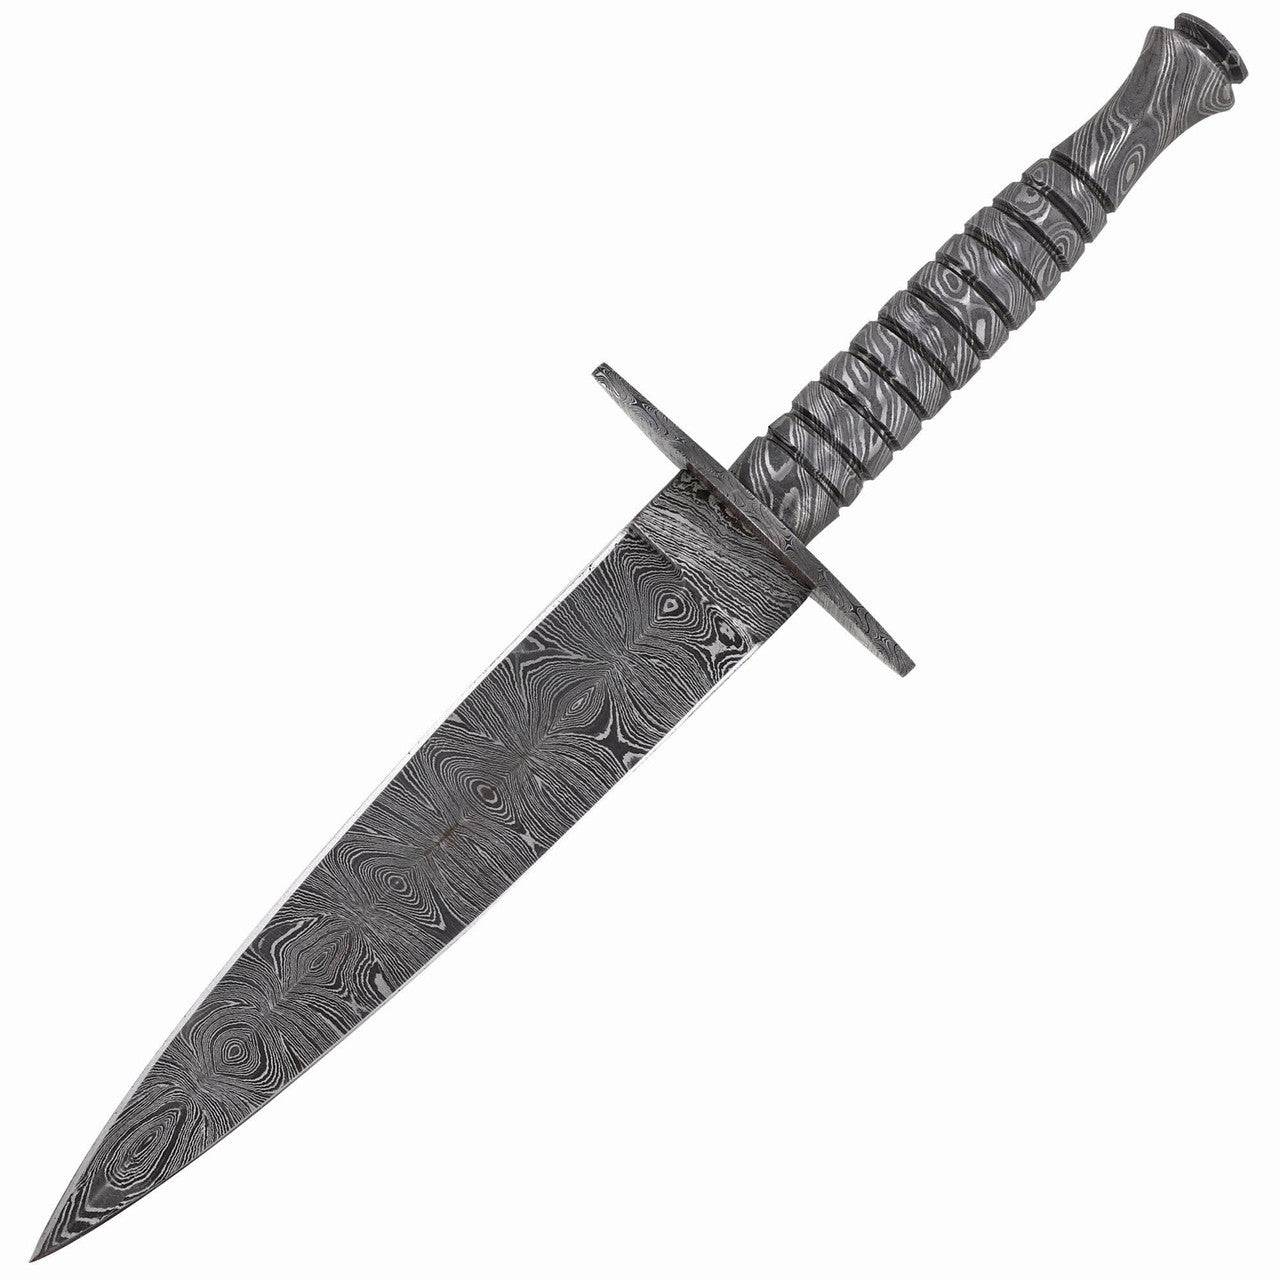 Full Damascus Steel Commando Knife with Leather Sheath-0